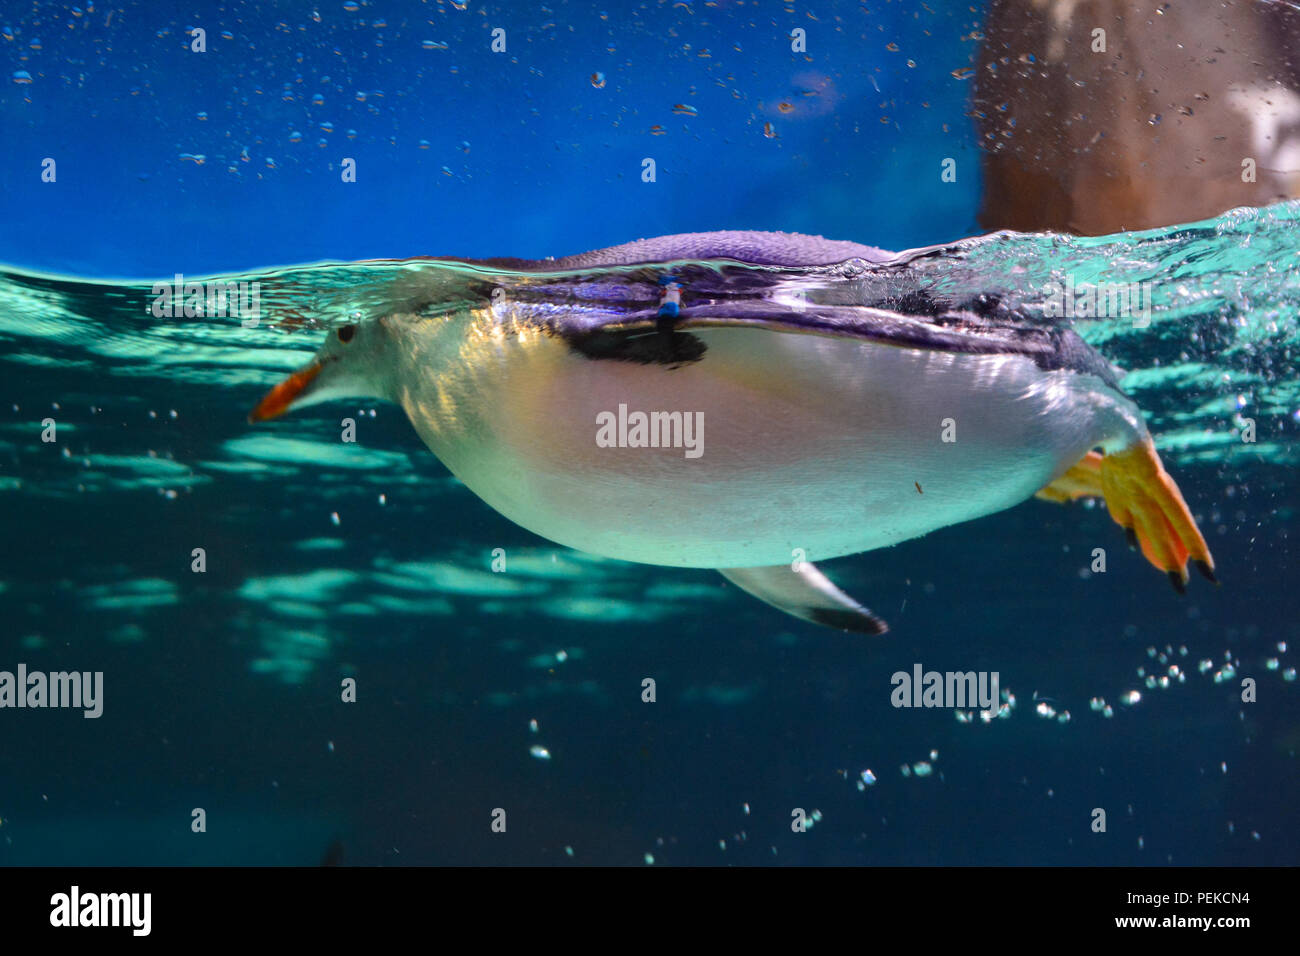 Penguin galleggia sull'acqua Foto Stock